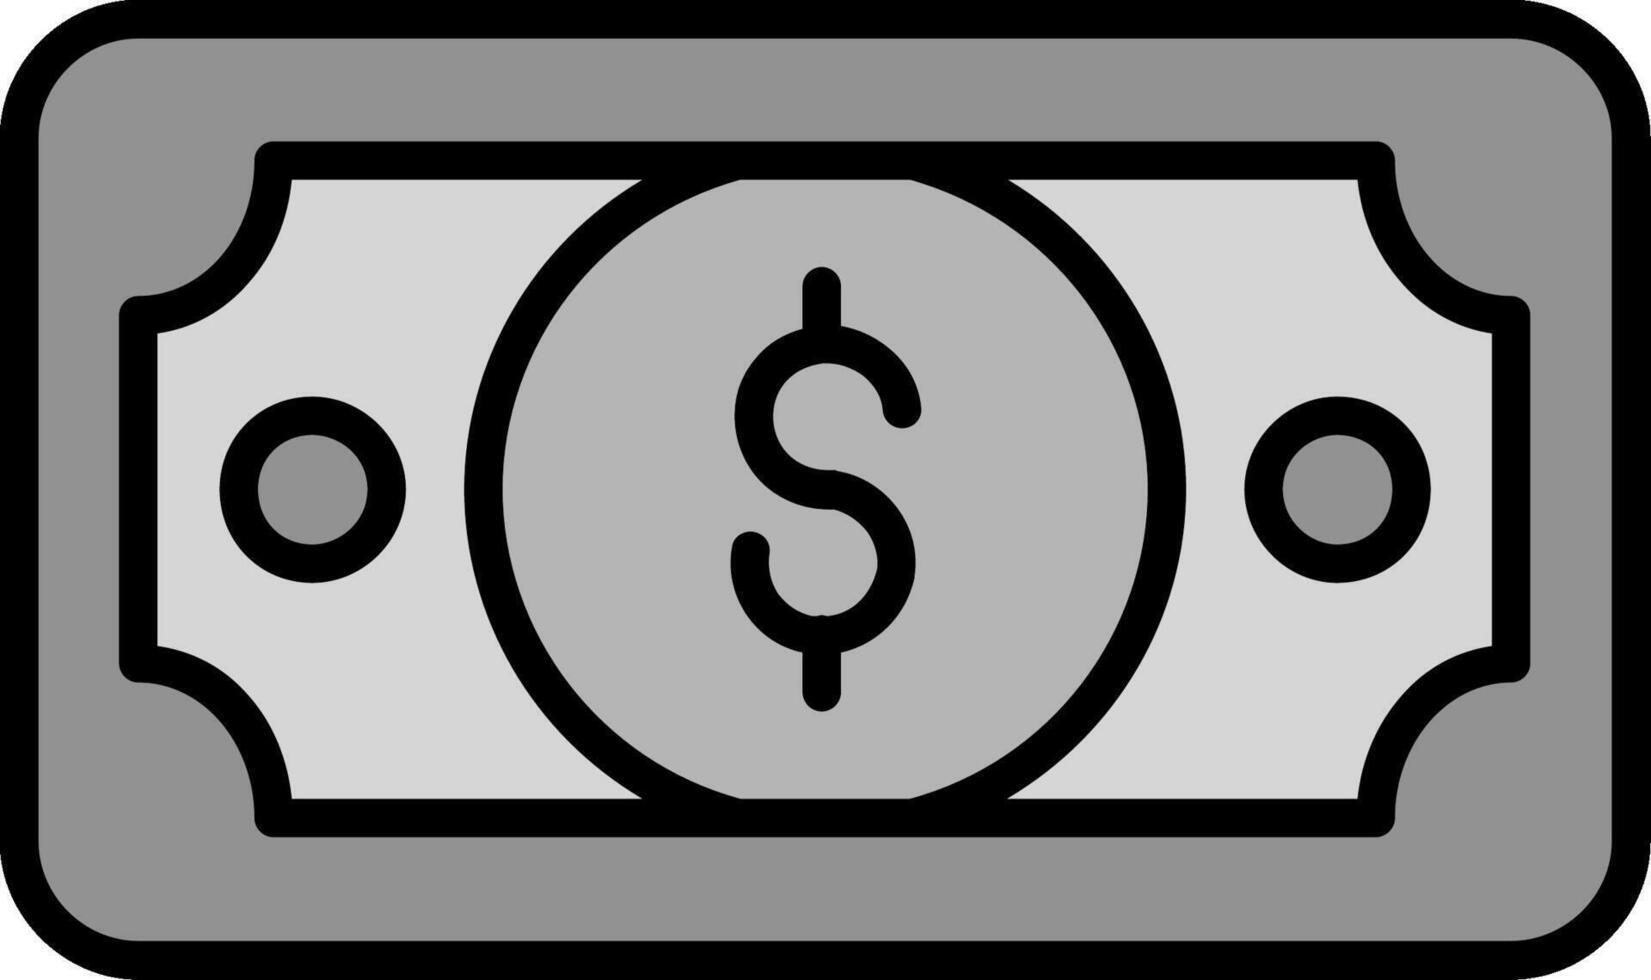 Dollar Vector Icon